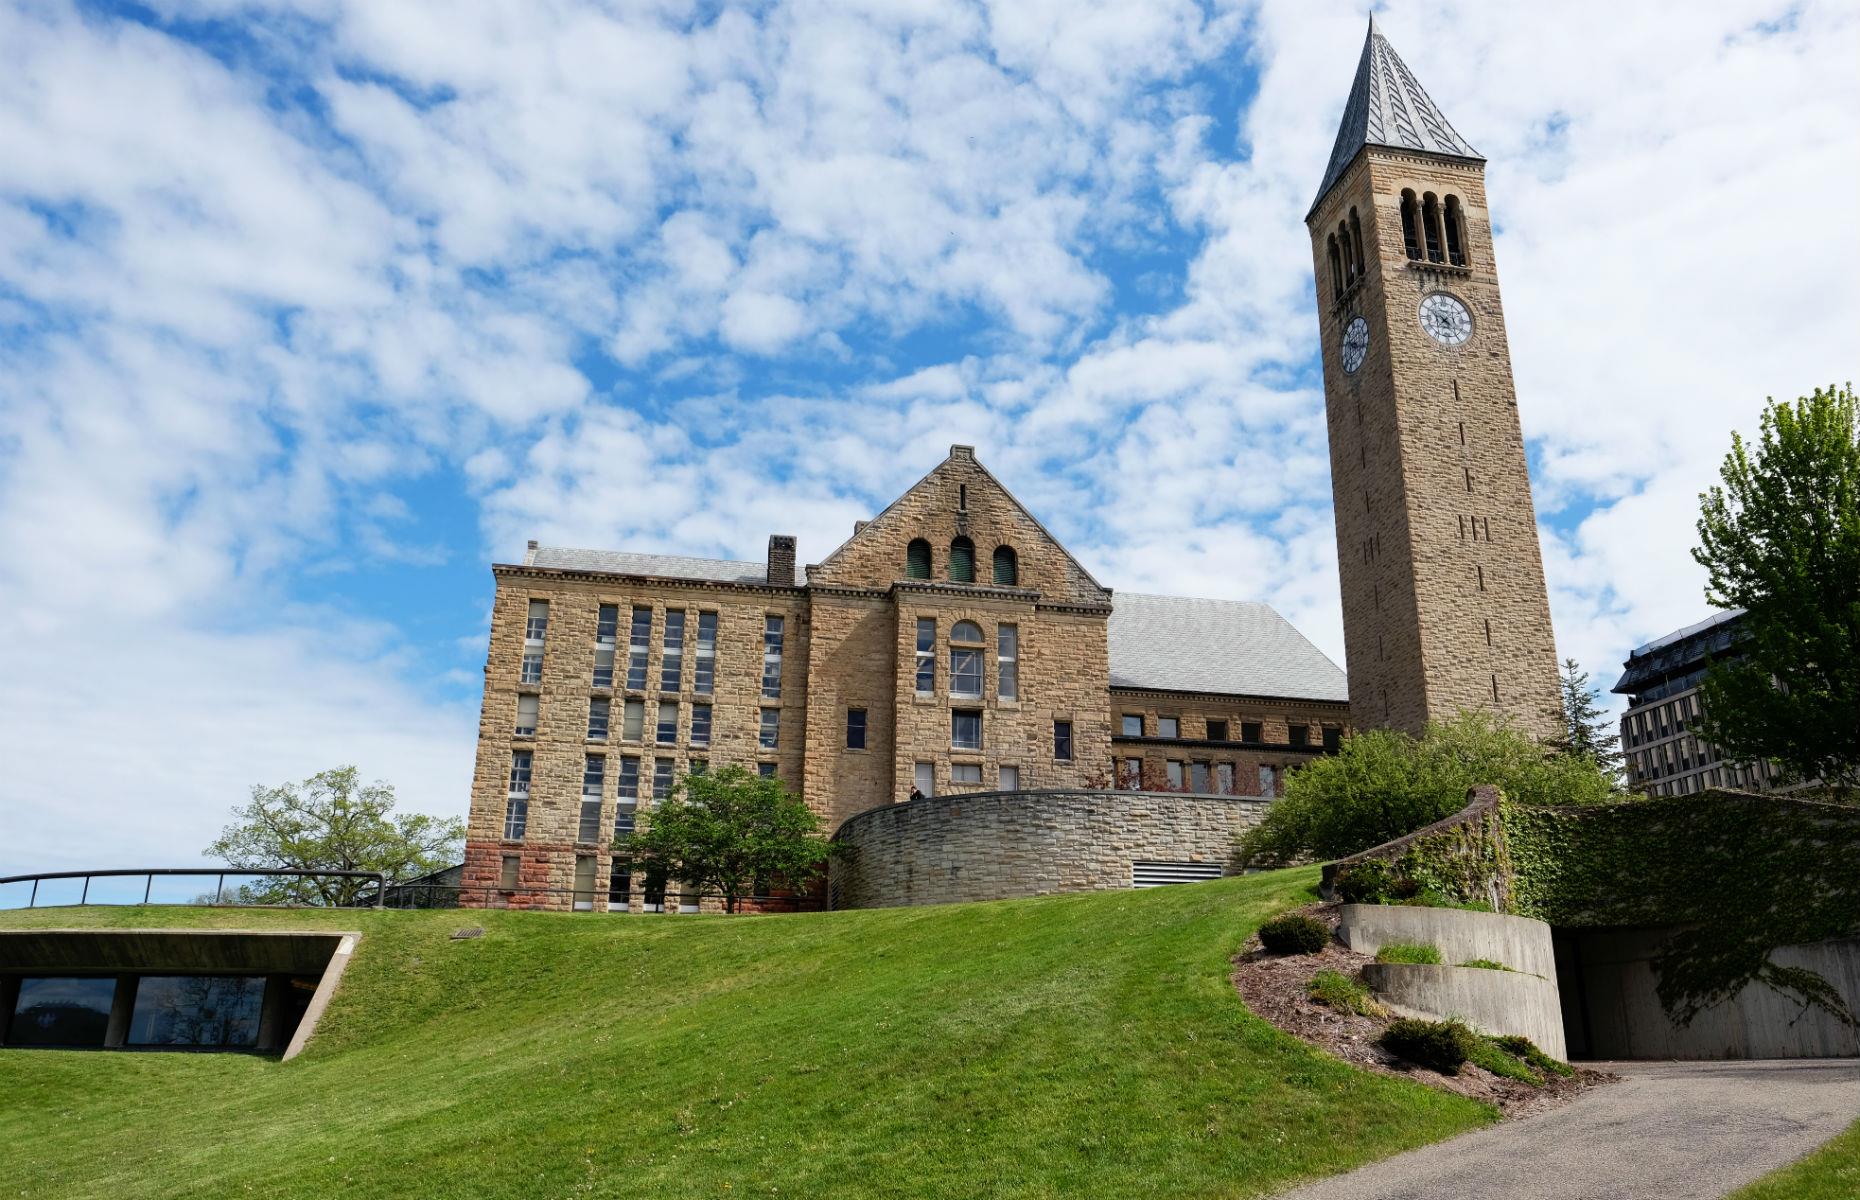 19) Cornell University, New York, US